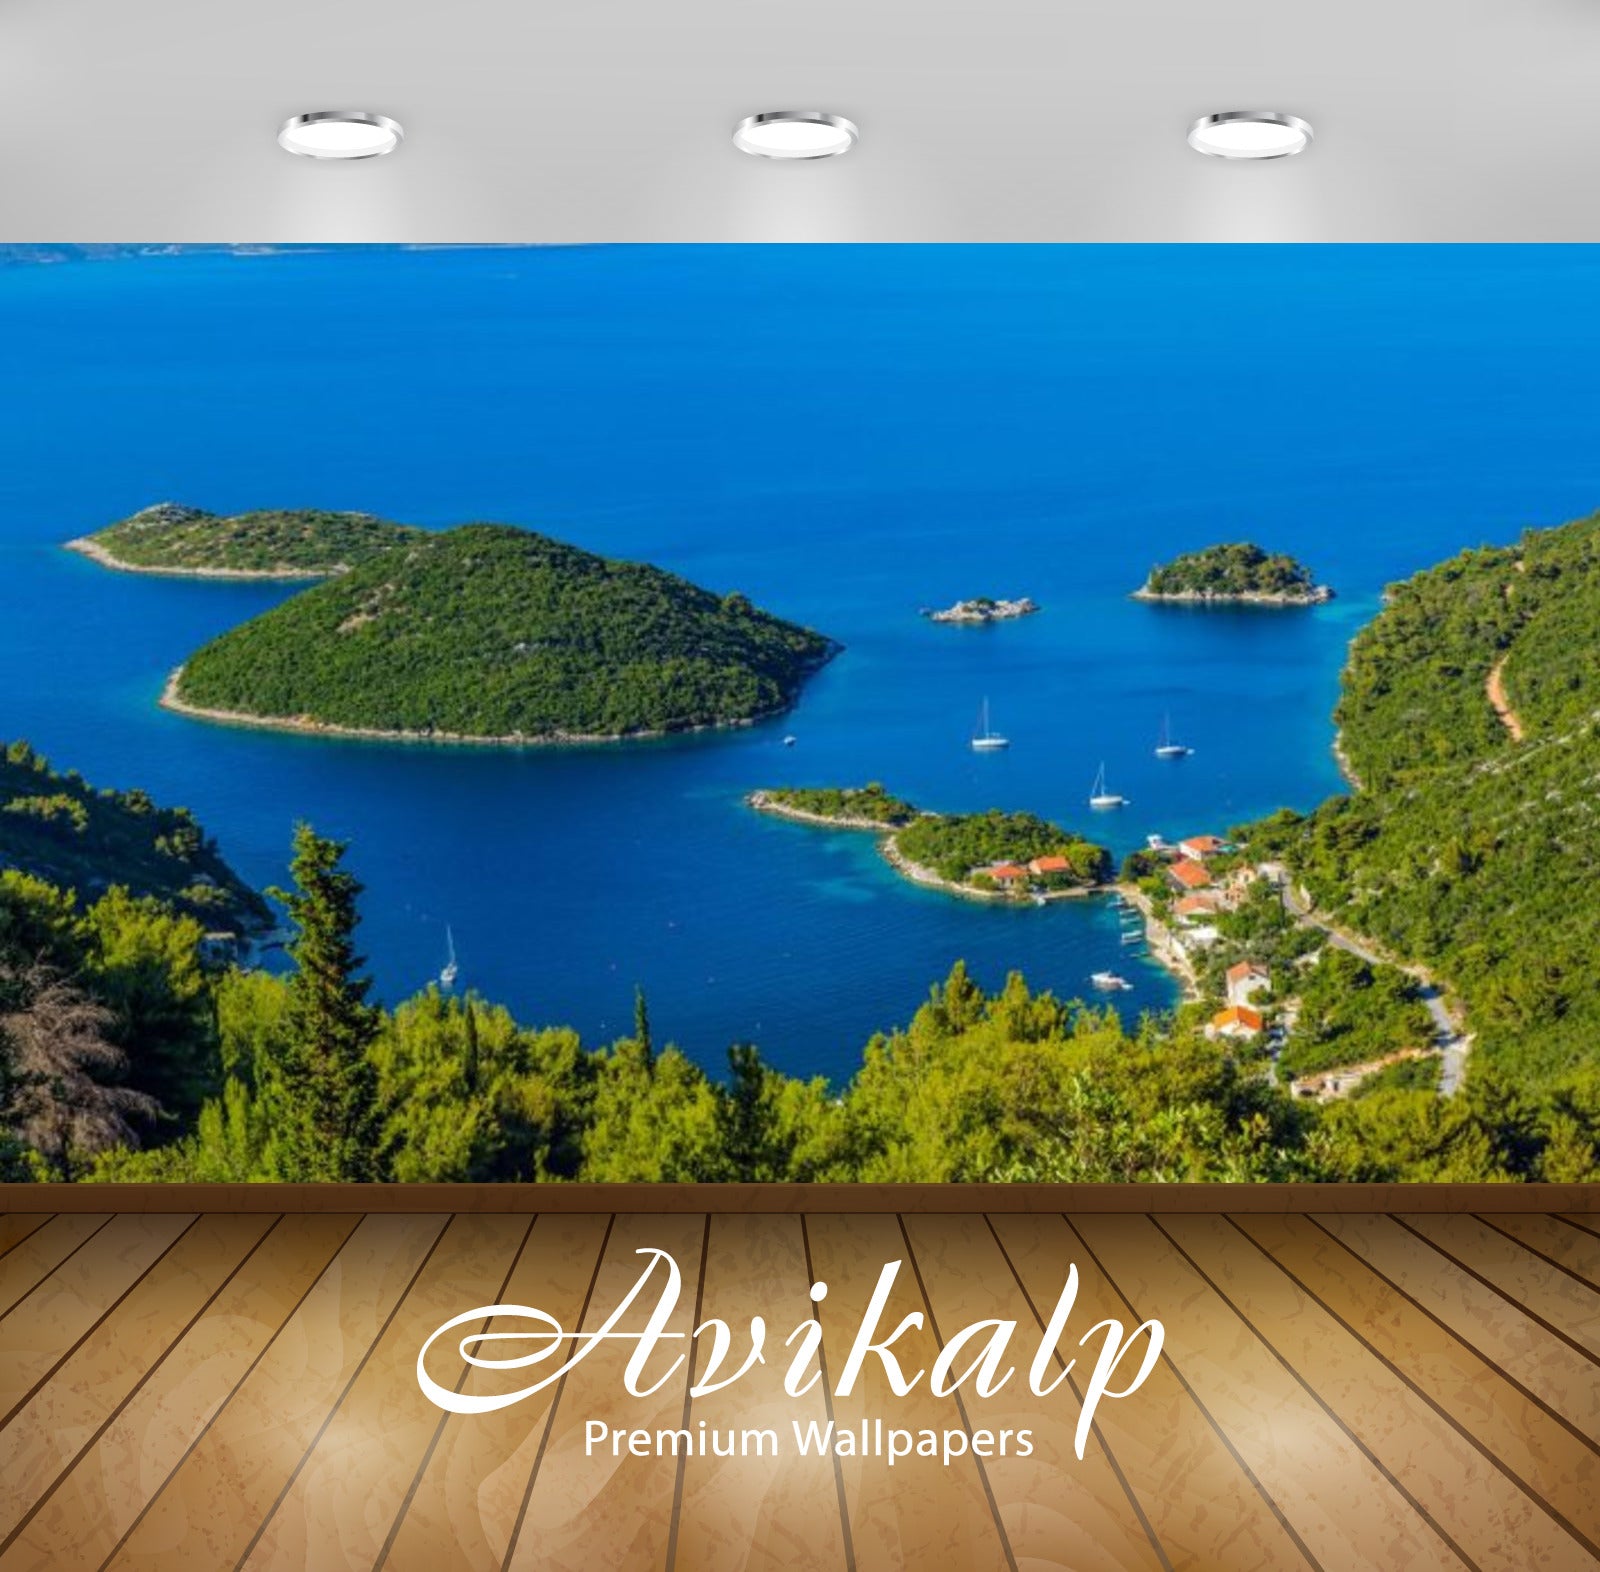 Avikalp Exclusive Awi2843 Nacionalni Park Mlet Adriatic Sea Croatia Full HD Wallpapers for Living ro